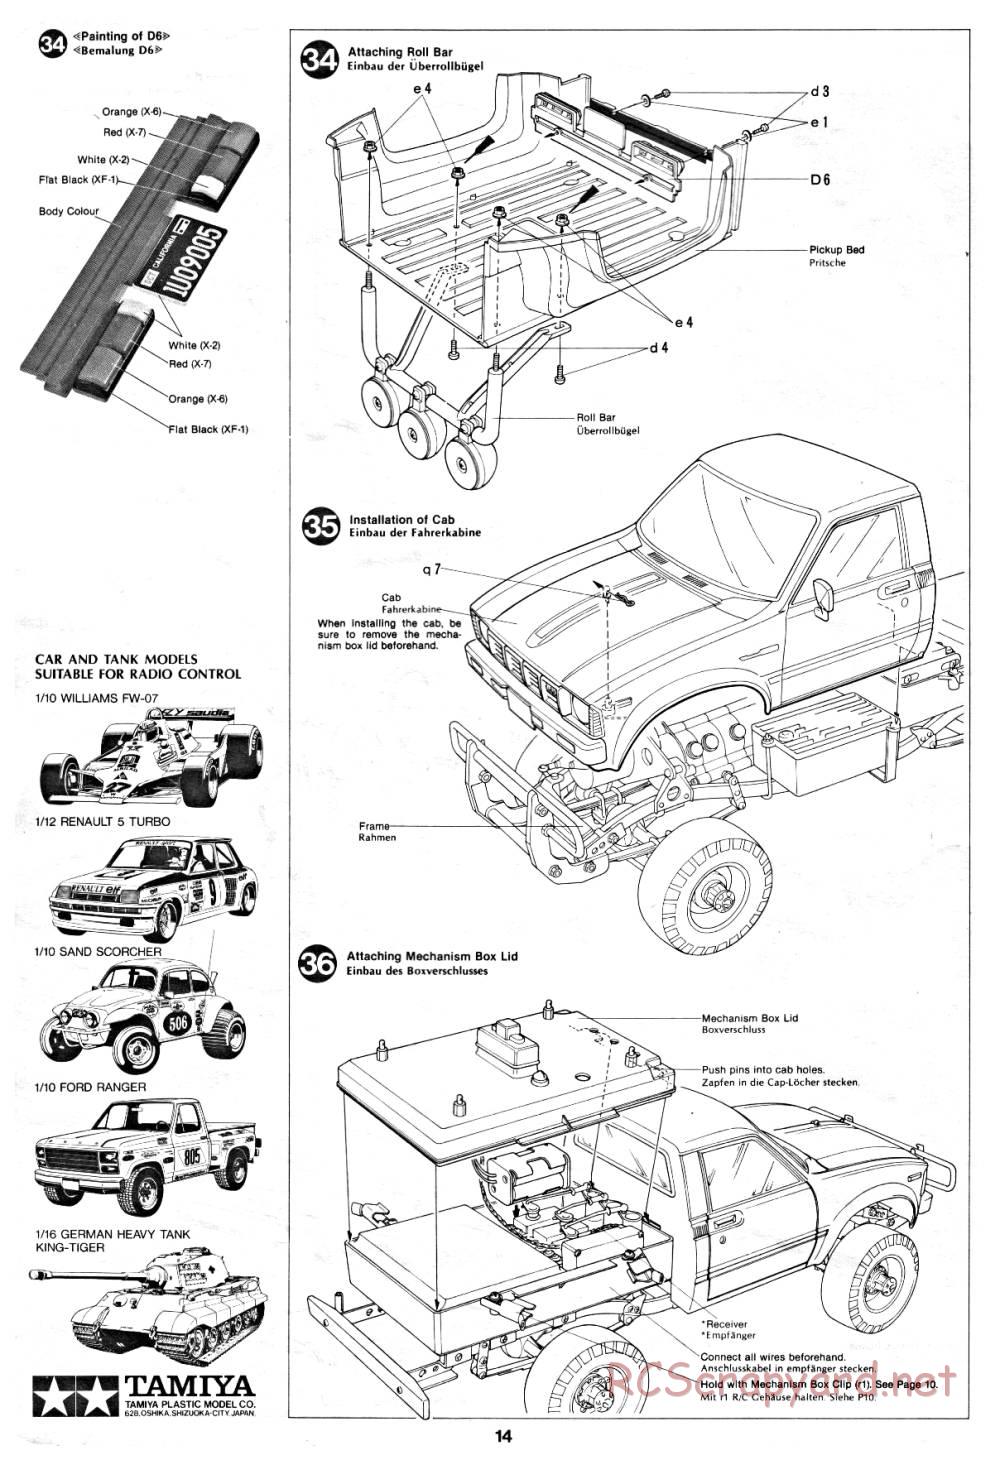 Tamiya - Toyota 4x4 Pick-Up - 58028 - Manual - Page 14